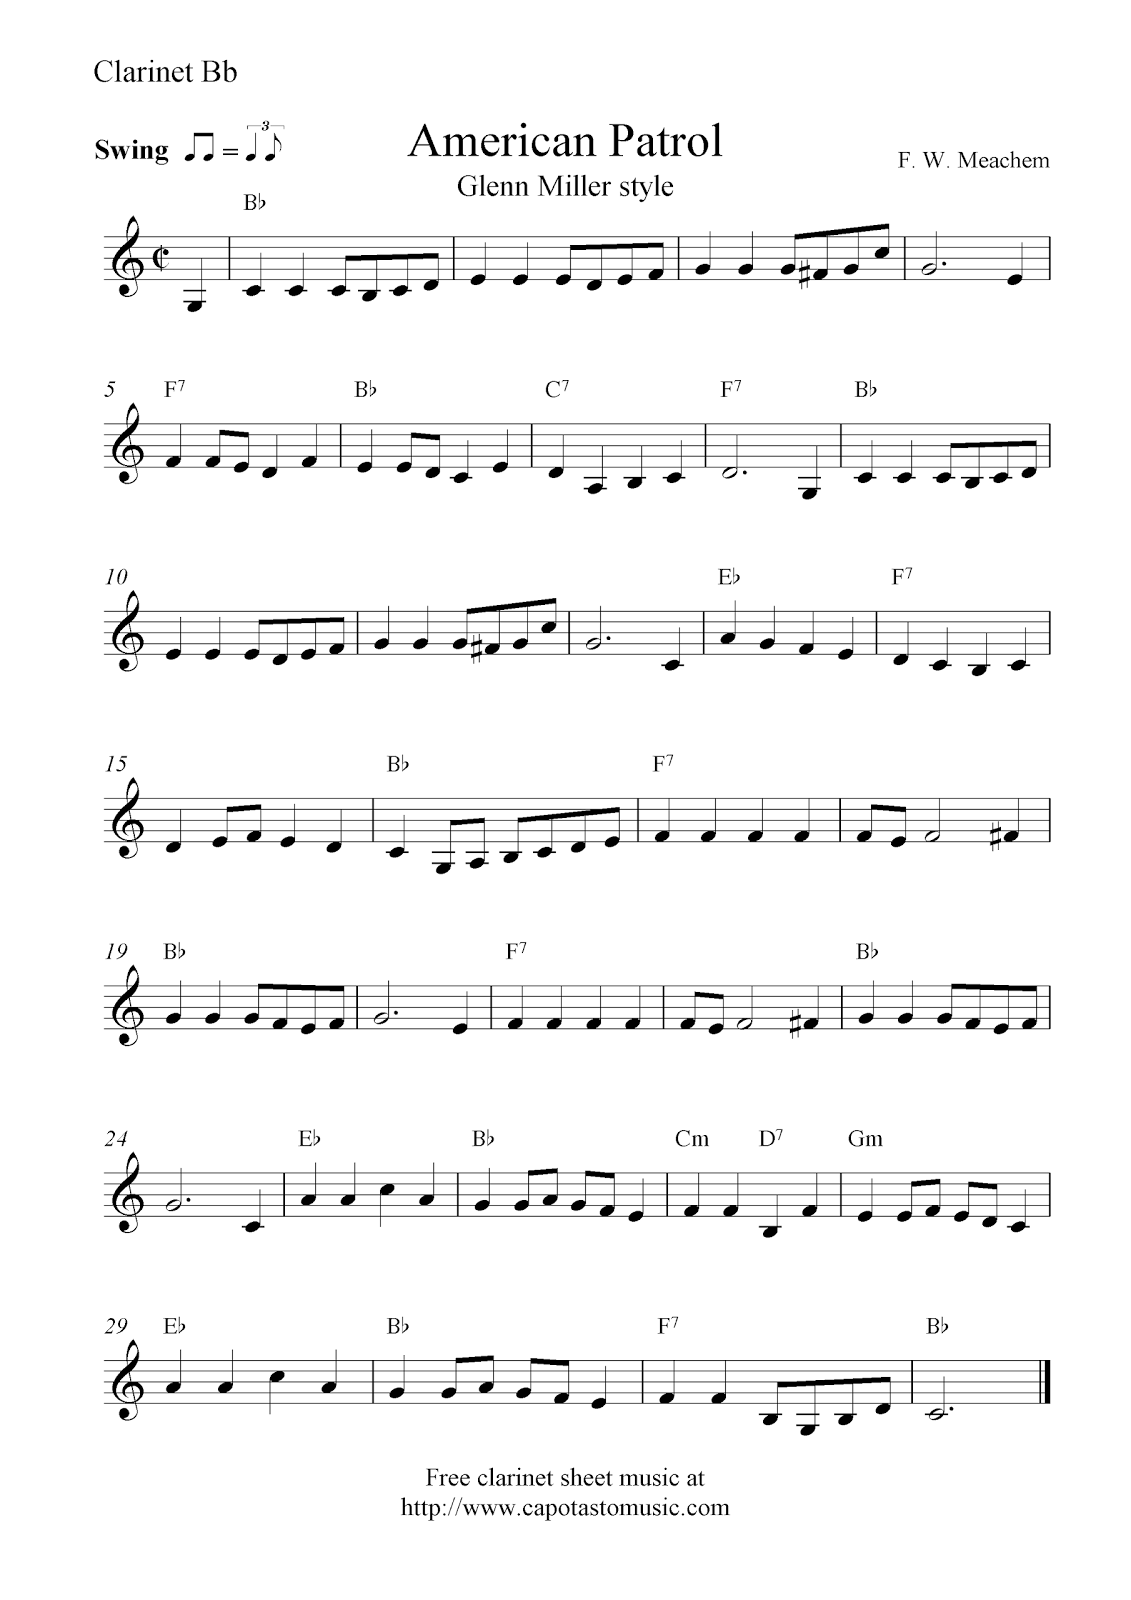 american-patrol-free-clarinet-sheet-music-notes